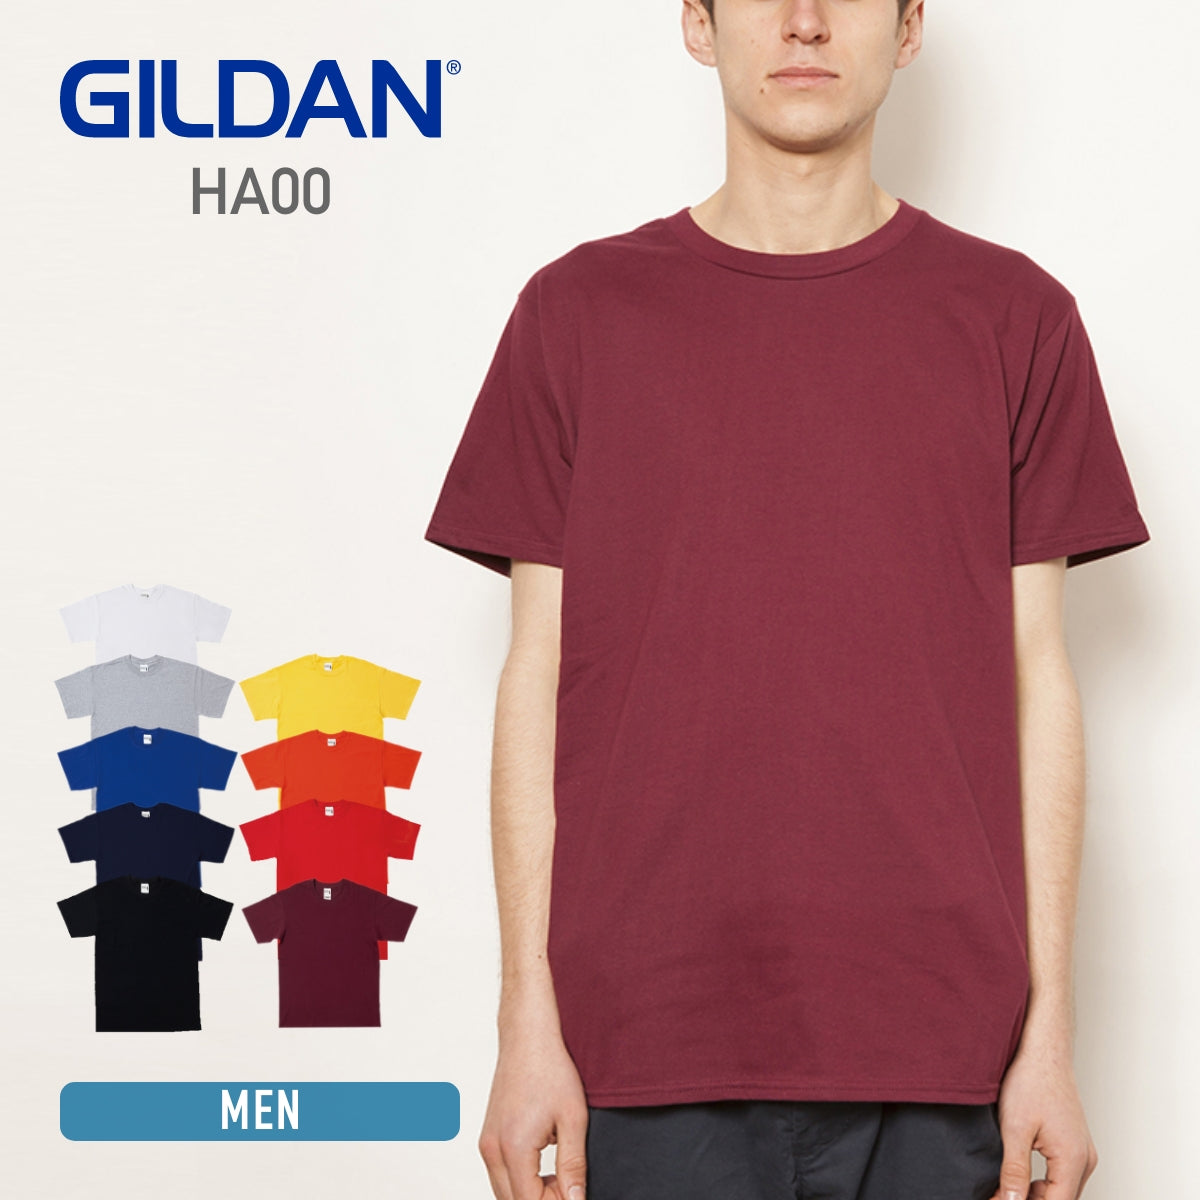 GILDAN特集 -年間7億枚、これが世界のナンバーワンTシャツ- – Tshirt ...